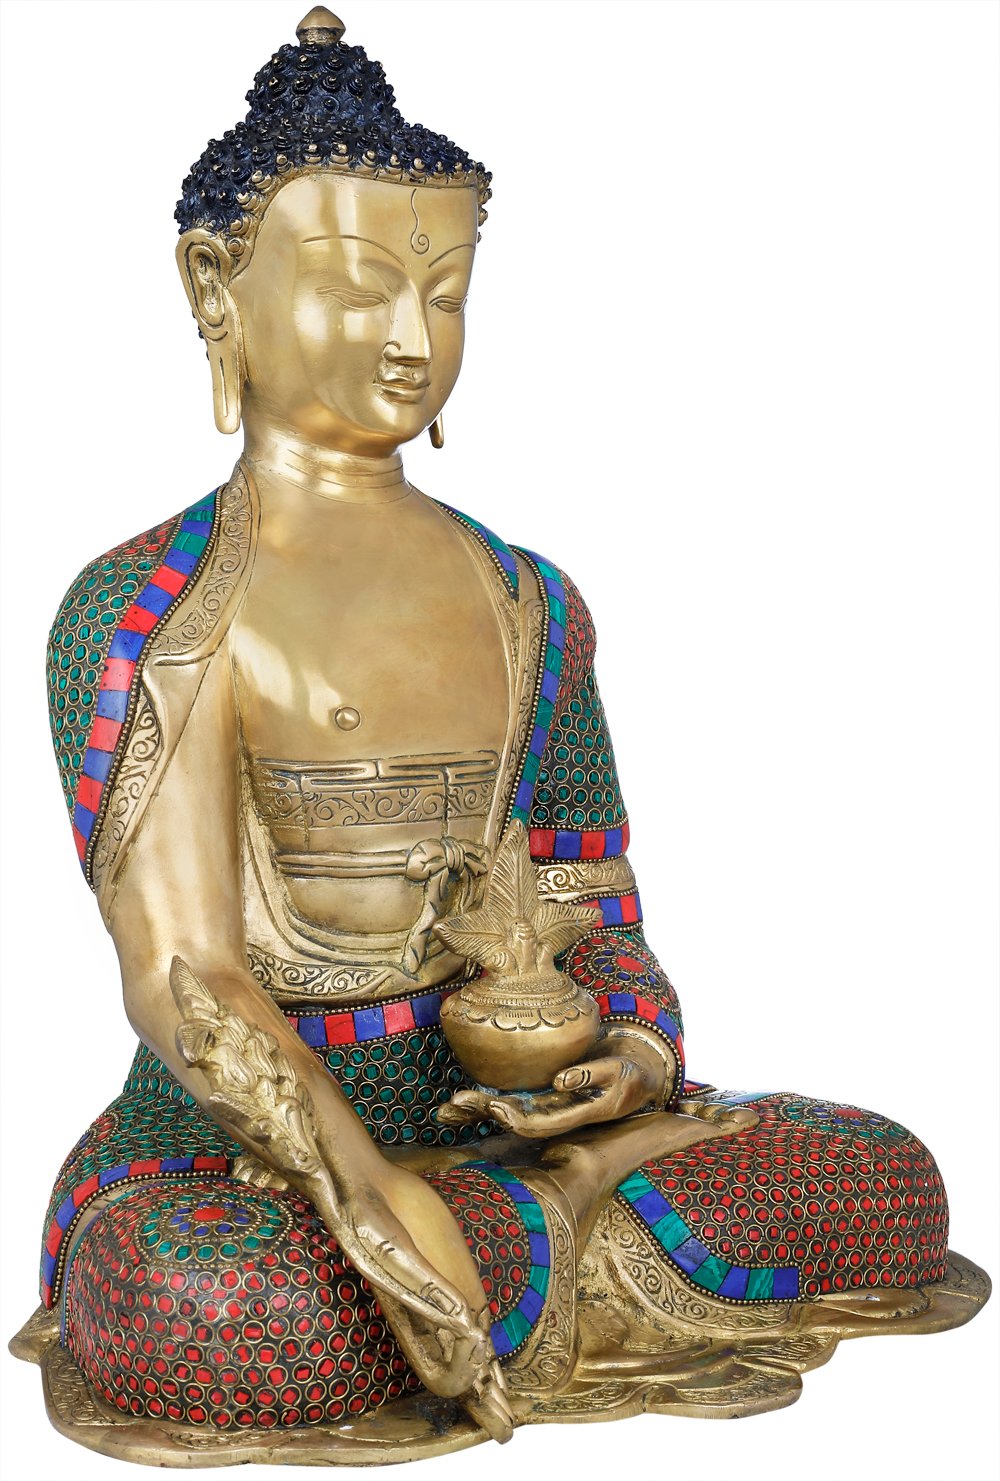 Medizinbuddha Messing 33cm 4kg Nepal Tibet Indien Buddhismus Medizin Buddha 